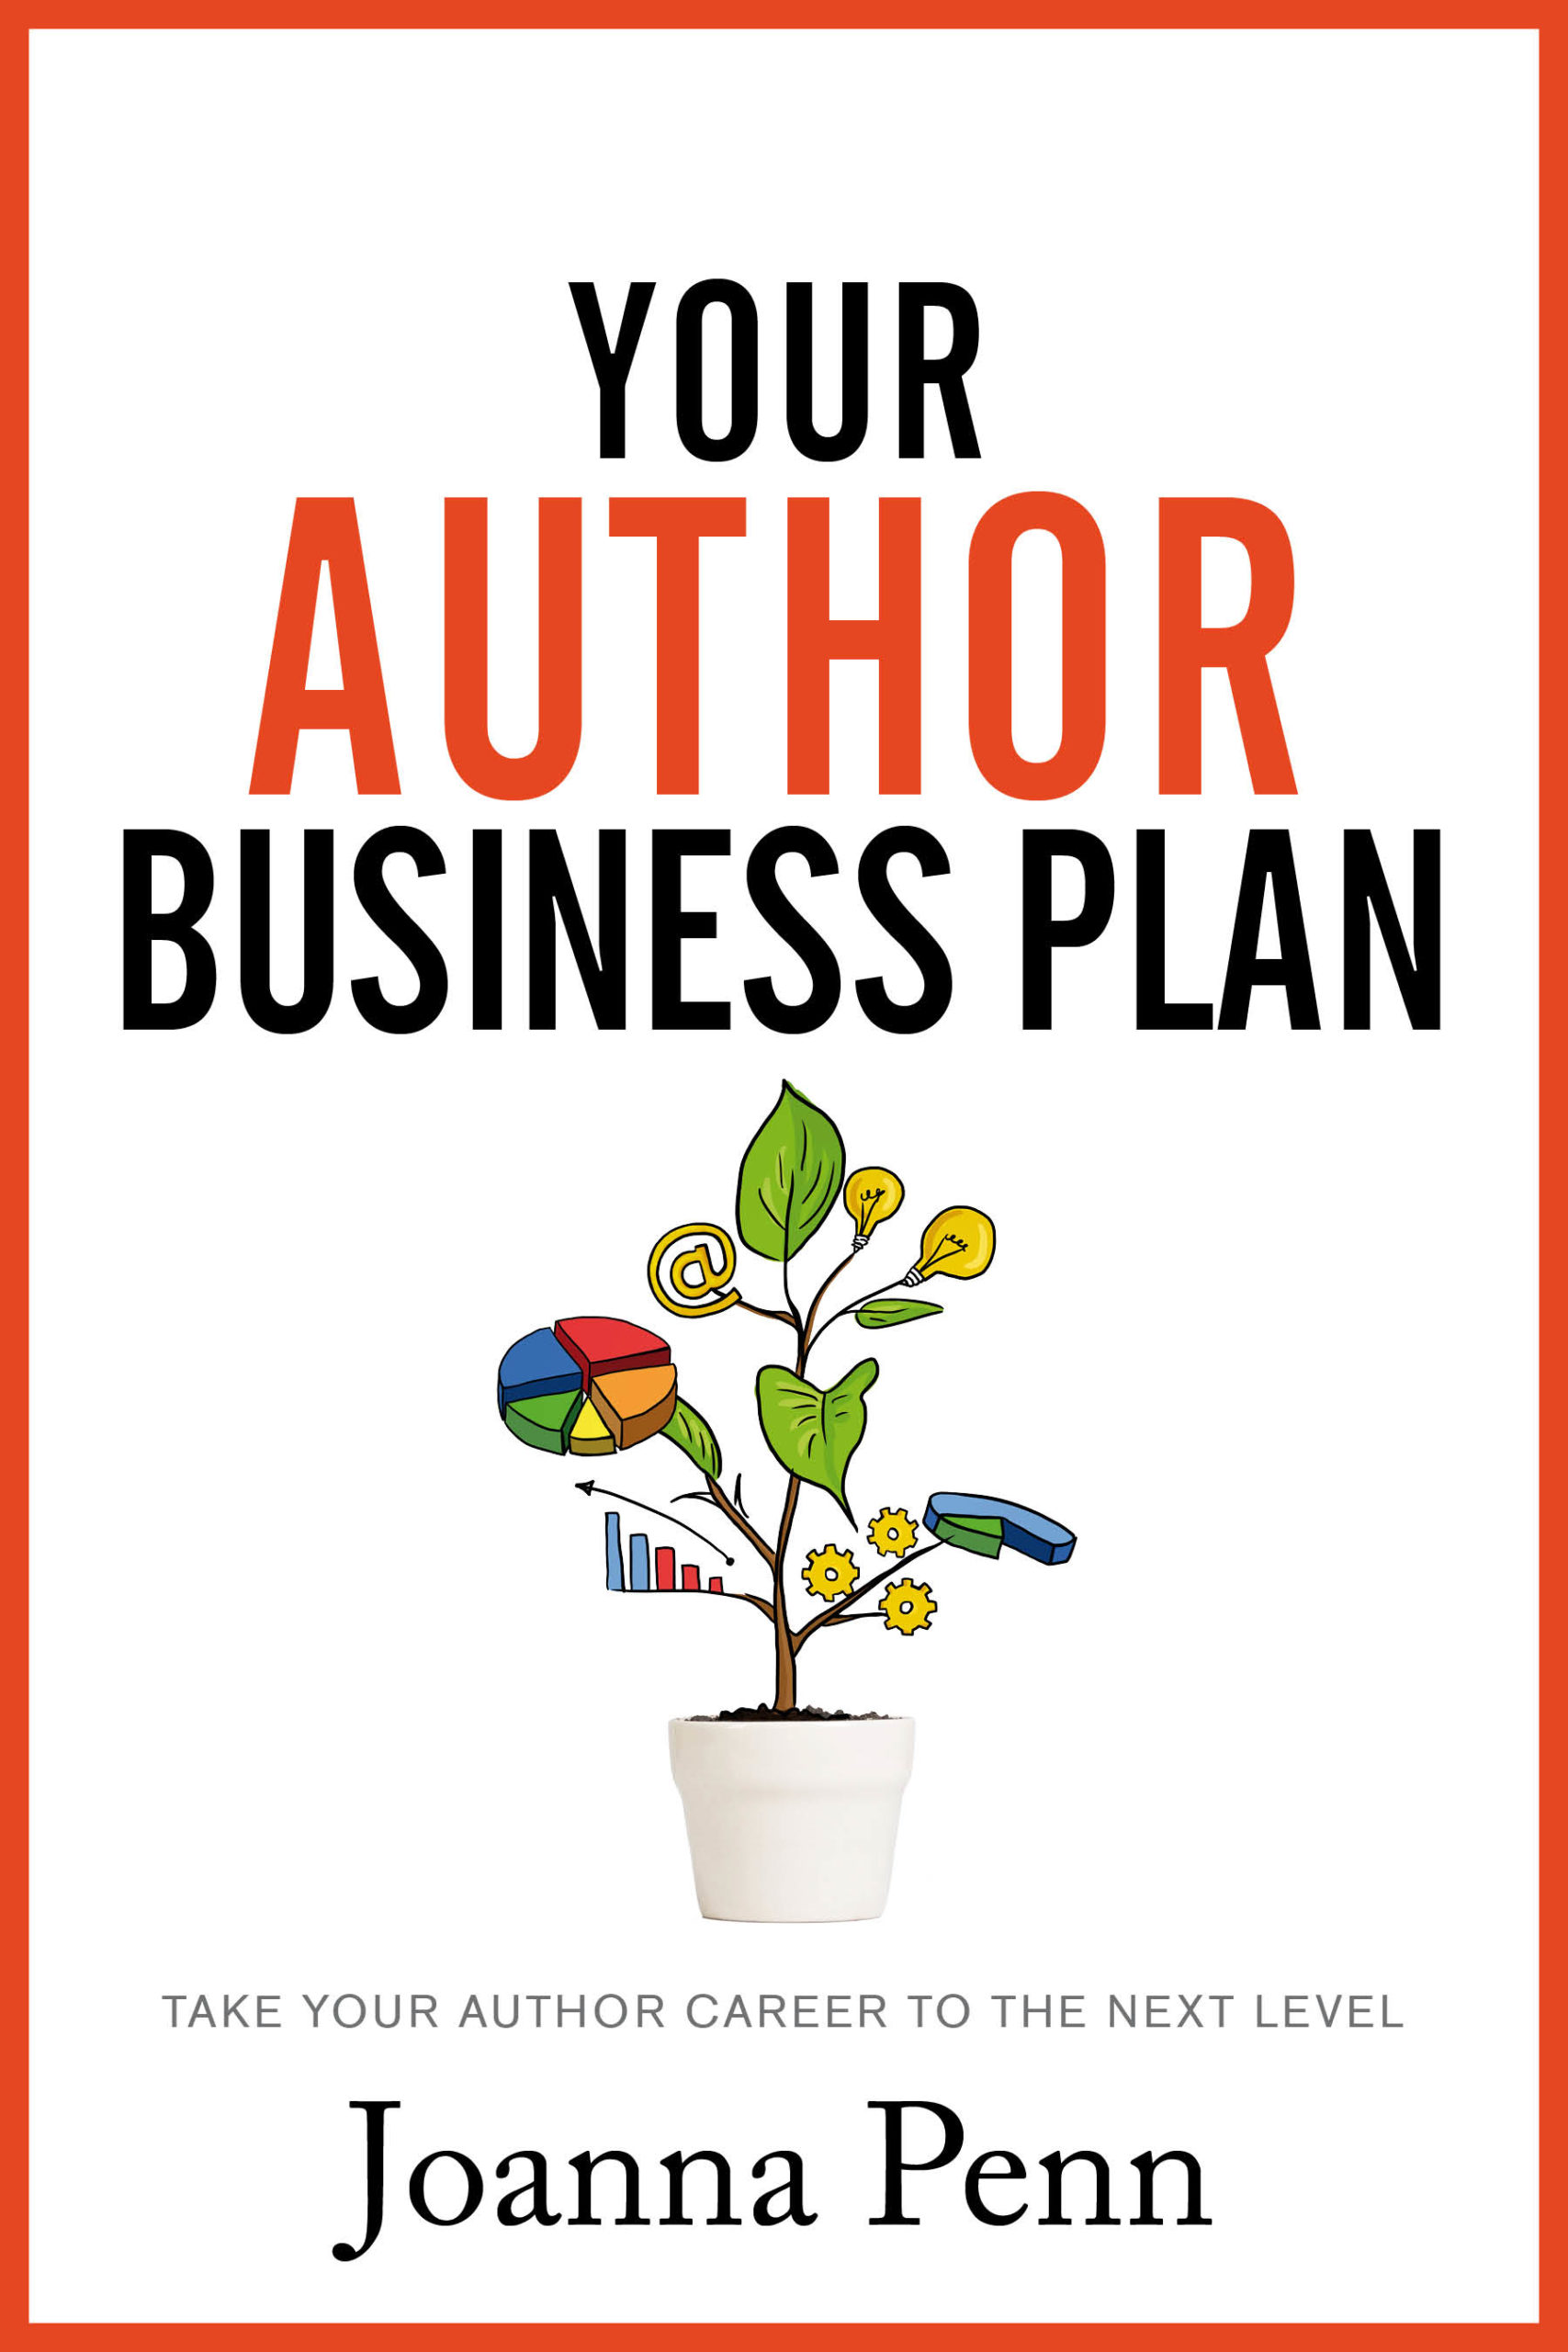 Your Author Business Plan by Joanna Penn